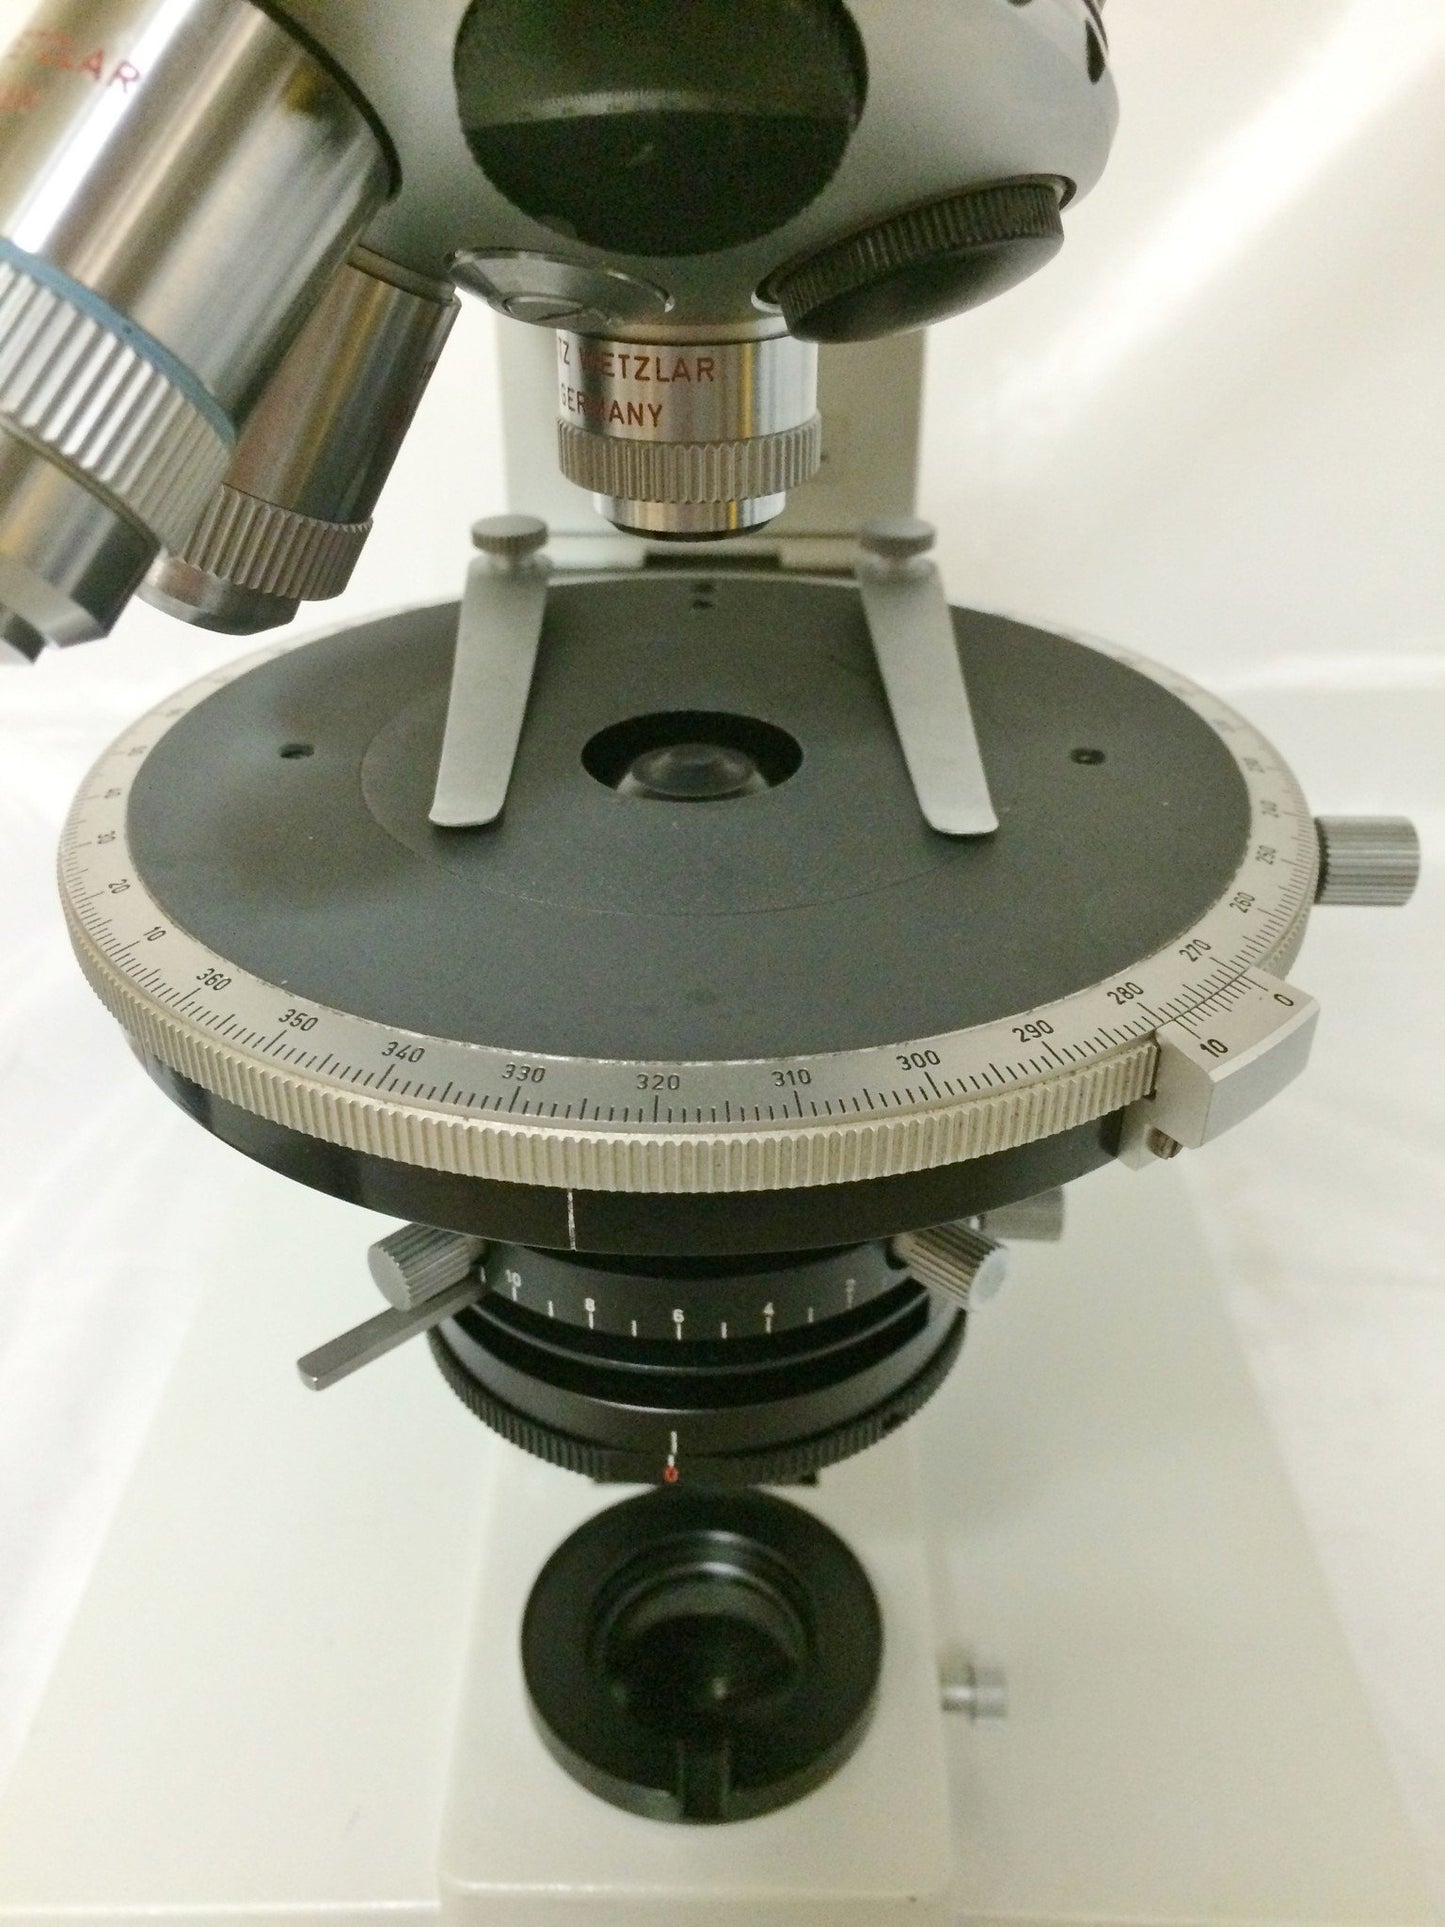 Leitz SM-LUX-POL Polarizing Microscope Refurbished - Microscope Central
 - 6